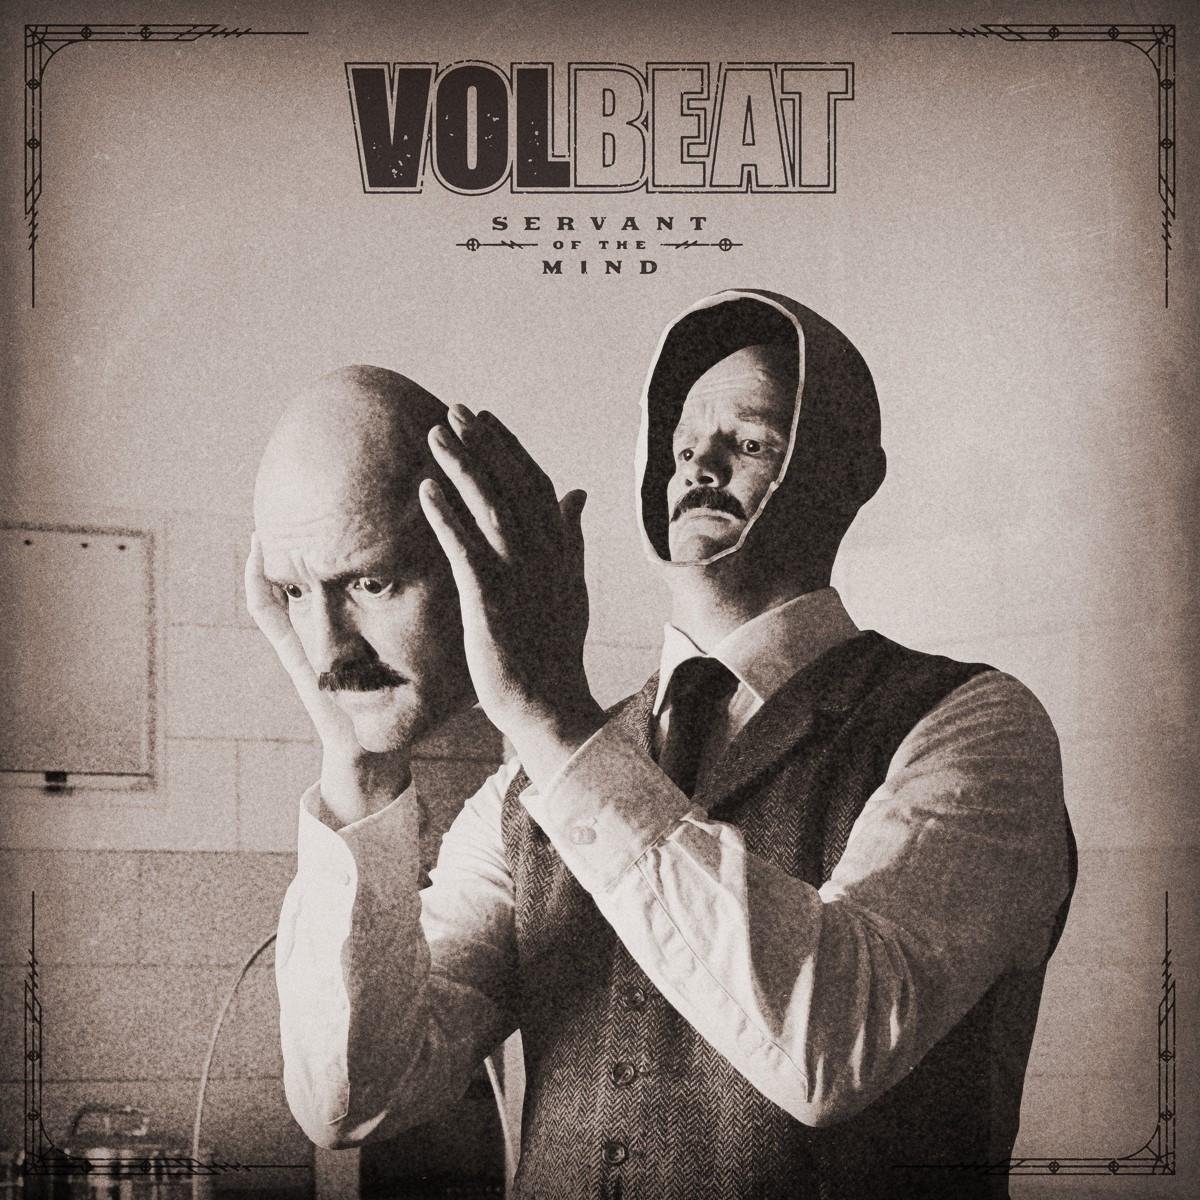 Volbeat - Servant Of The Mind (CD) - Volbeat